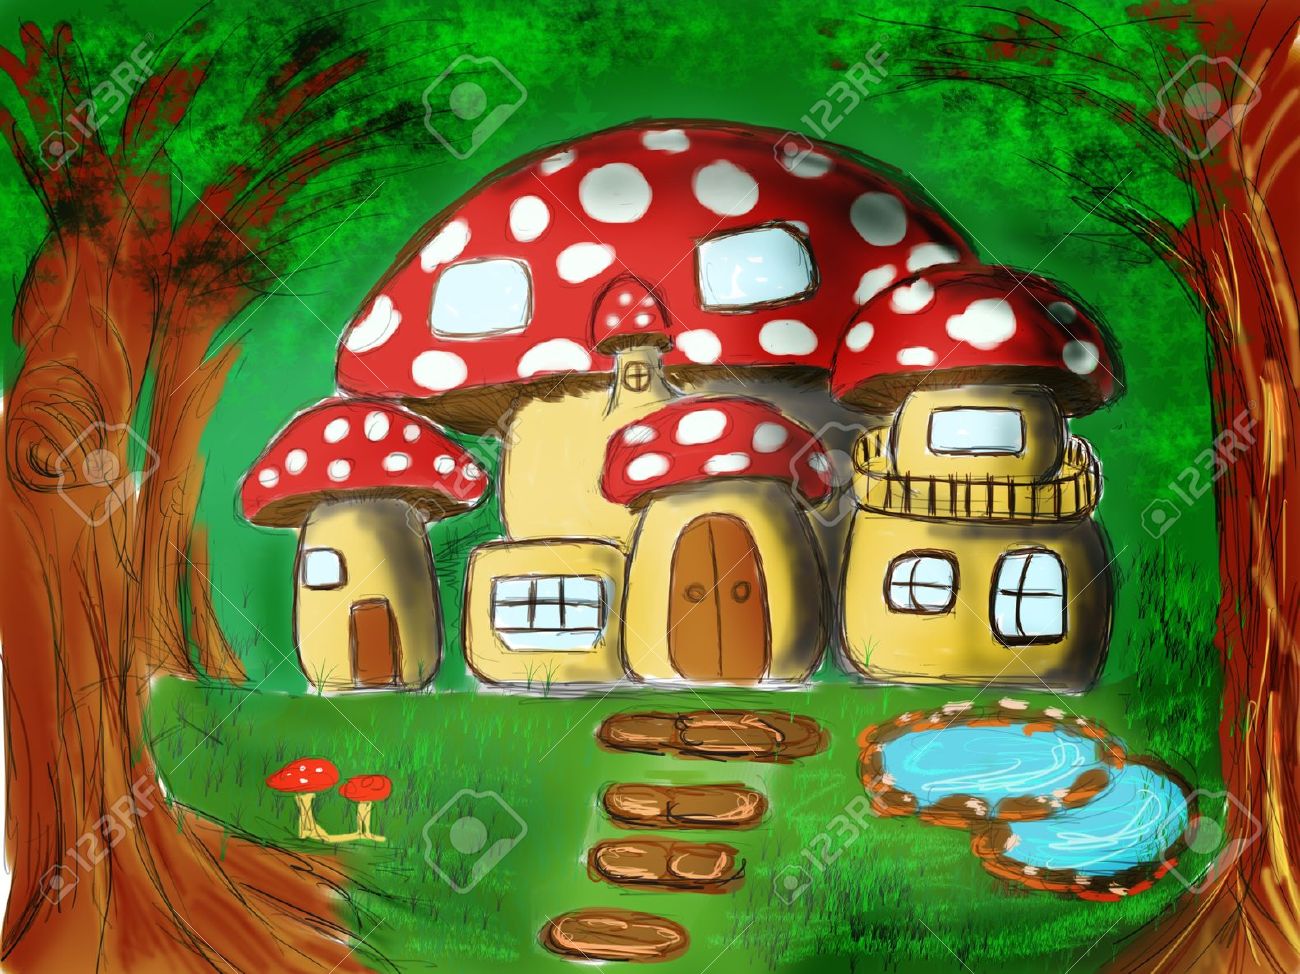 Mushroom House Wallpaper